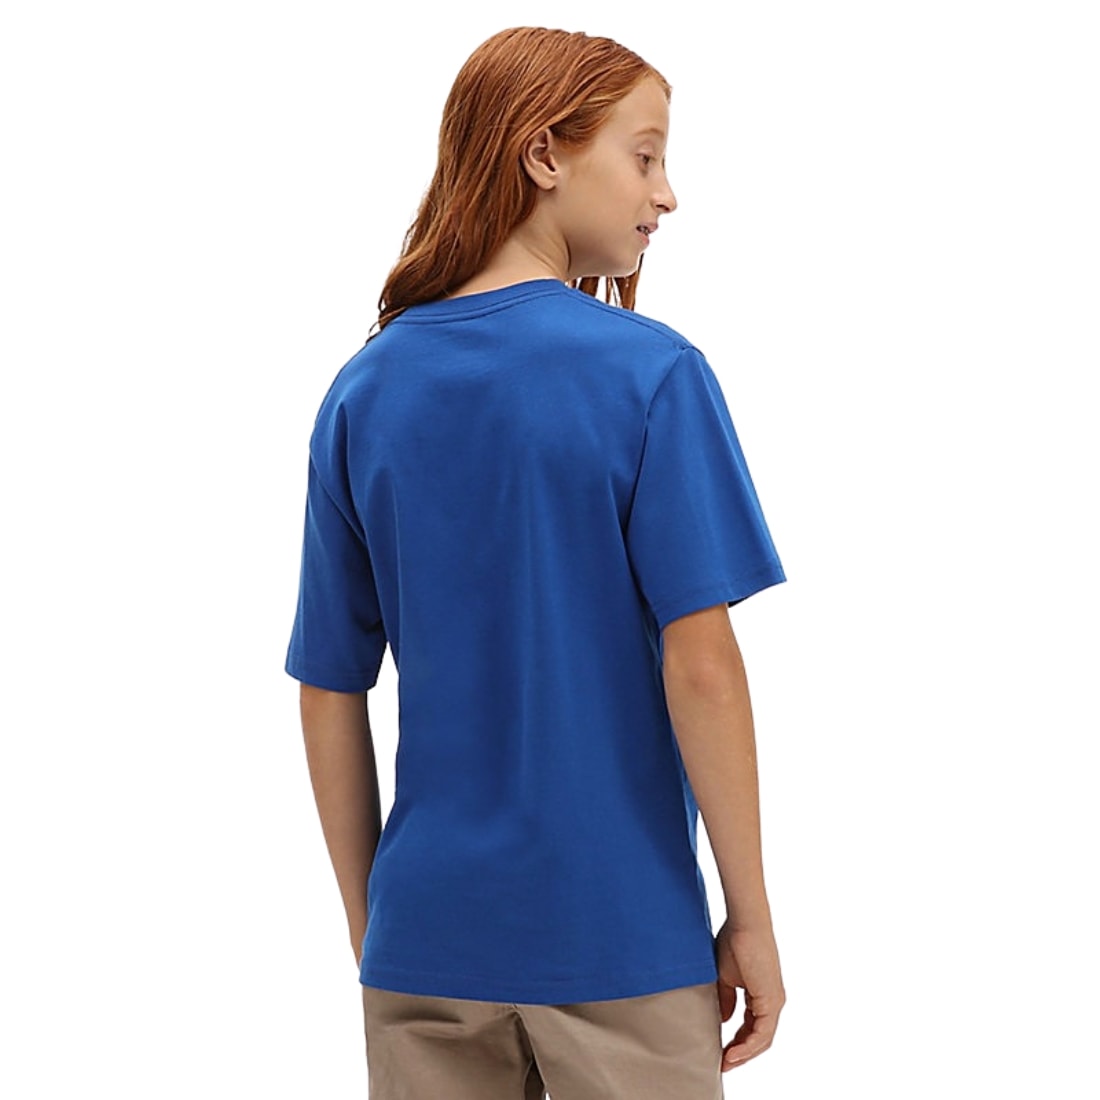 Vans Kids Reflective Checkerboard Flame Boys T-Shirt - Blue - Boys Surf Brand T-Shirt by Vans